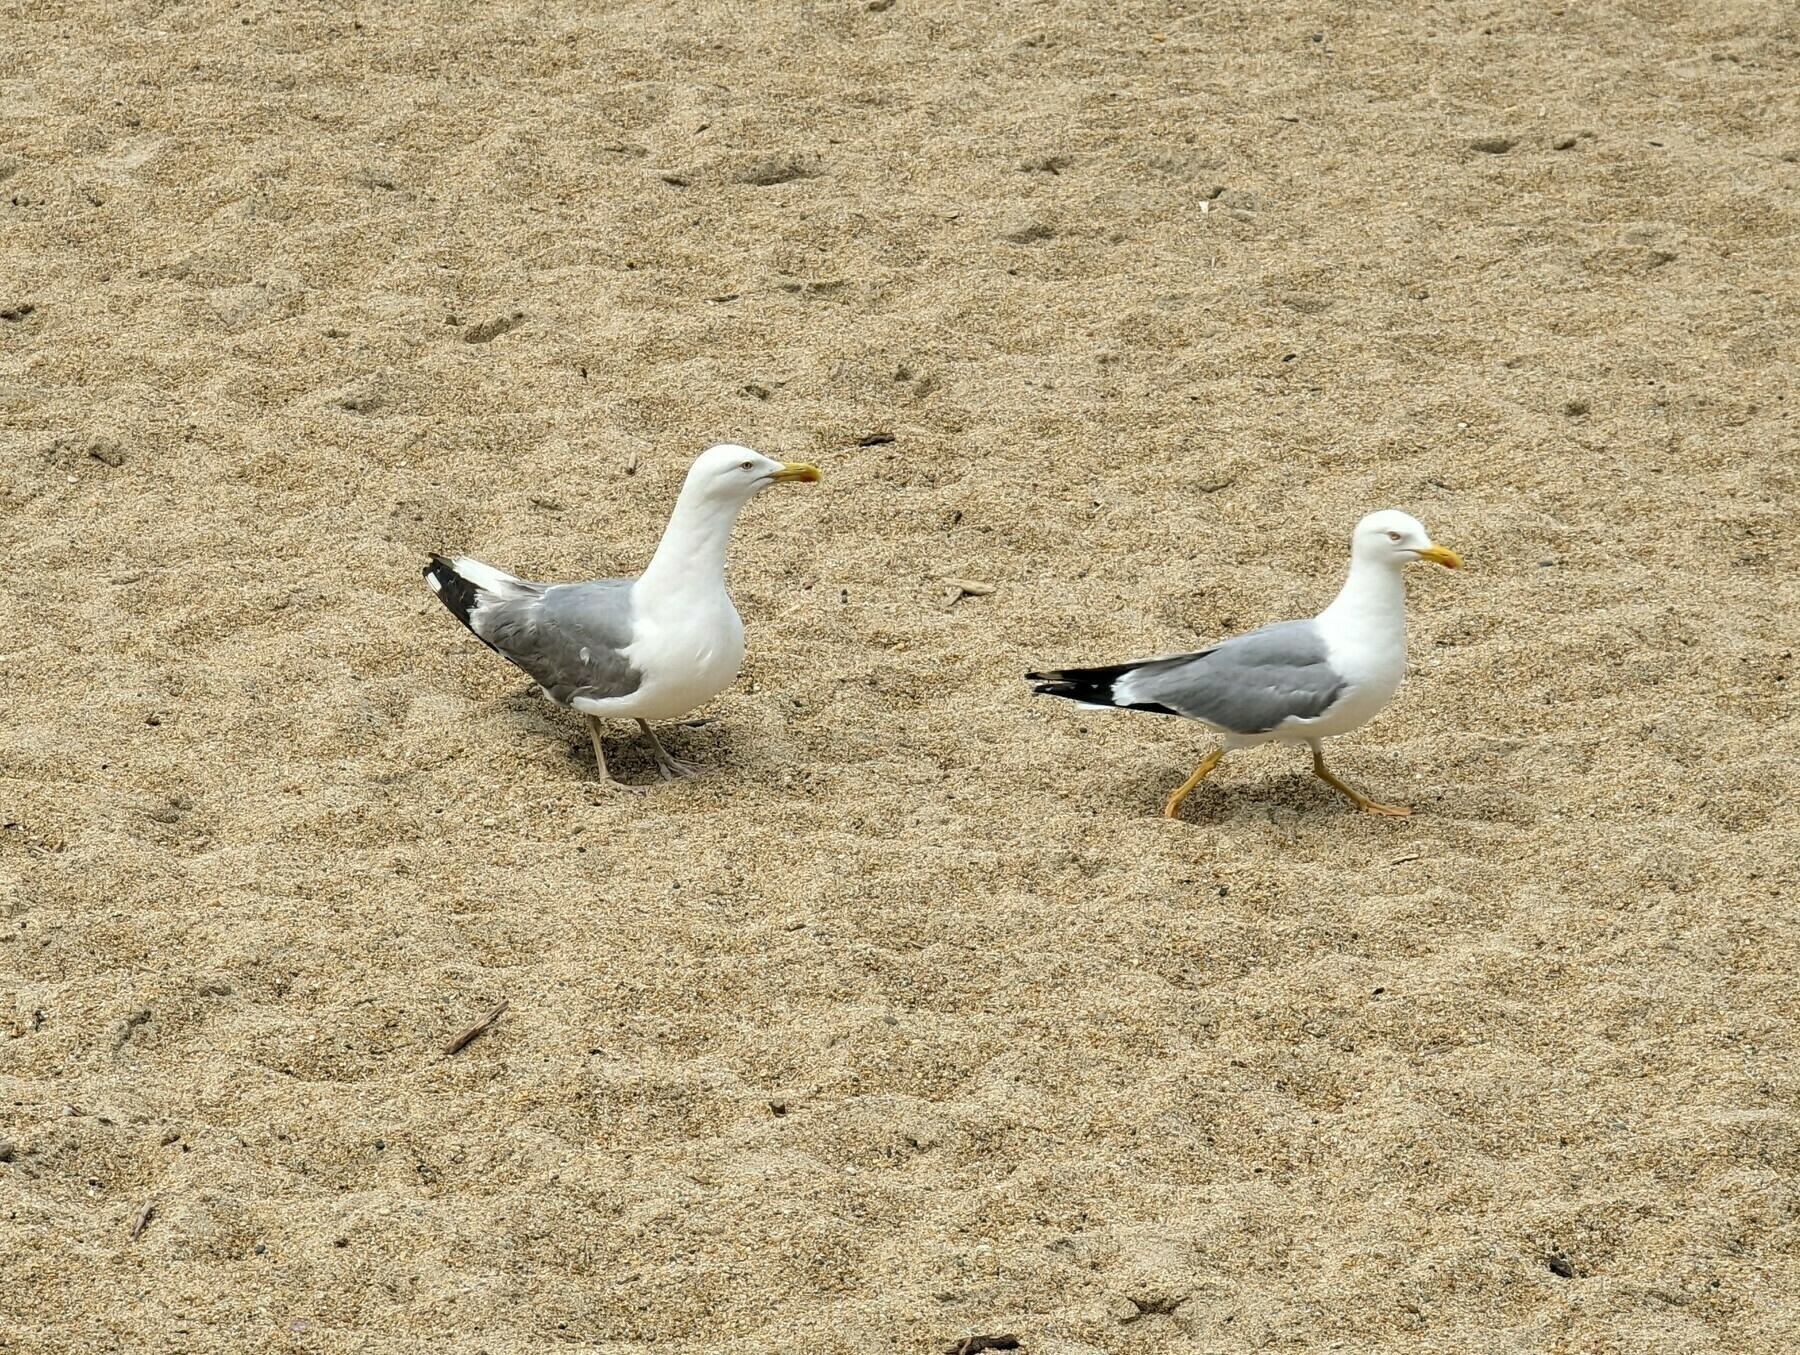 Two European seagulls standing on a beach.